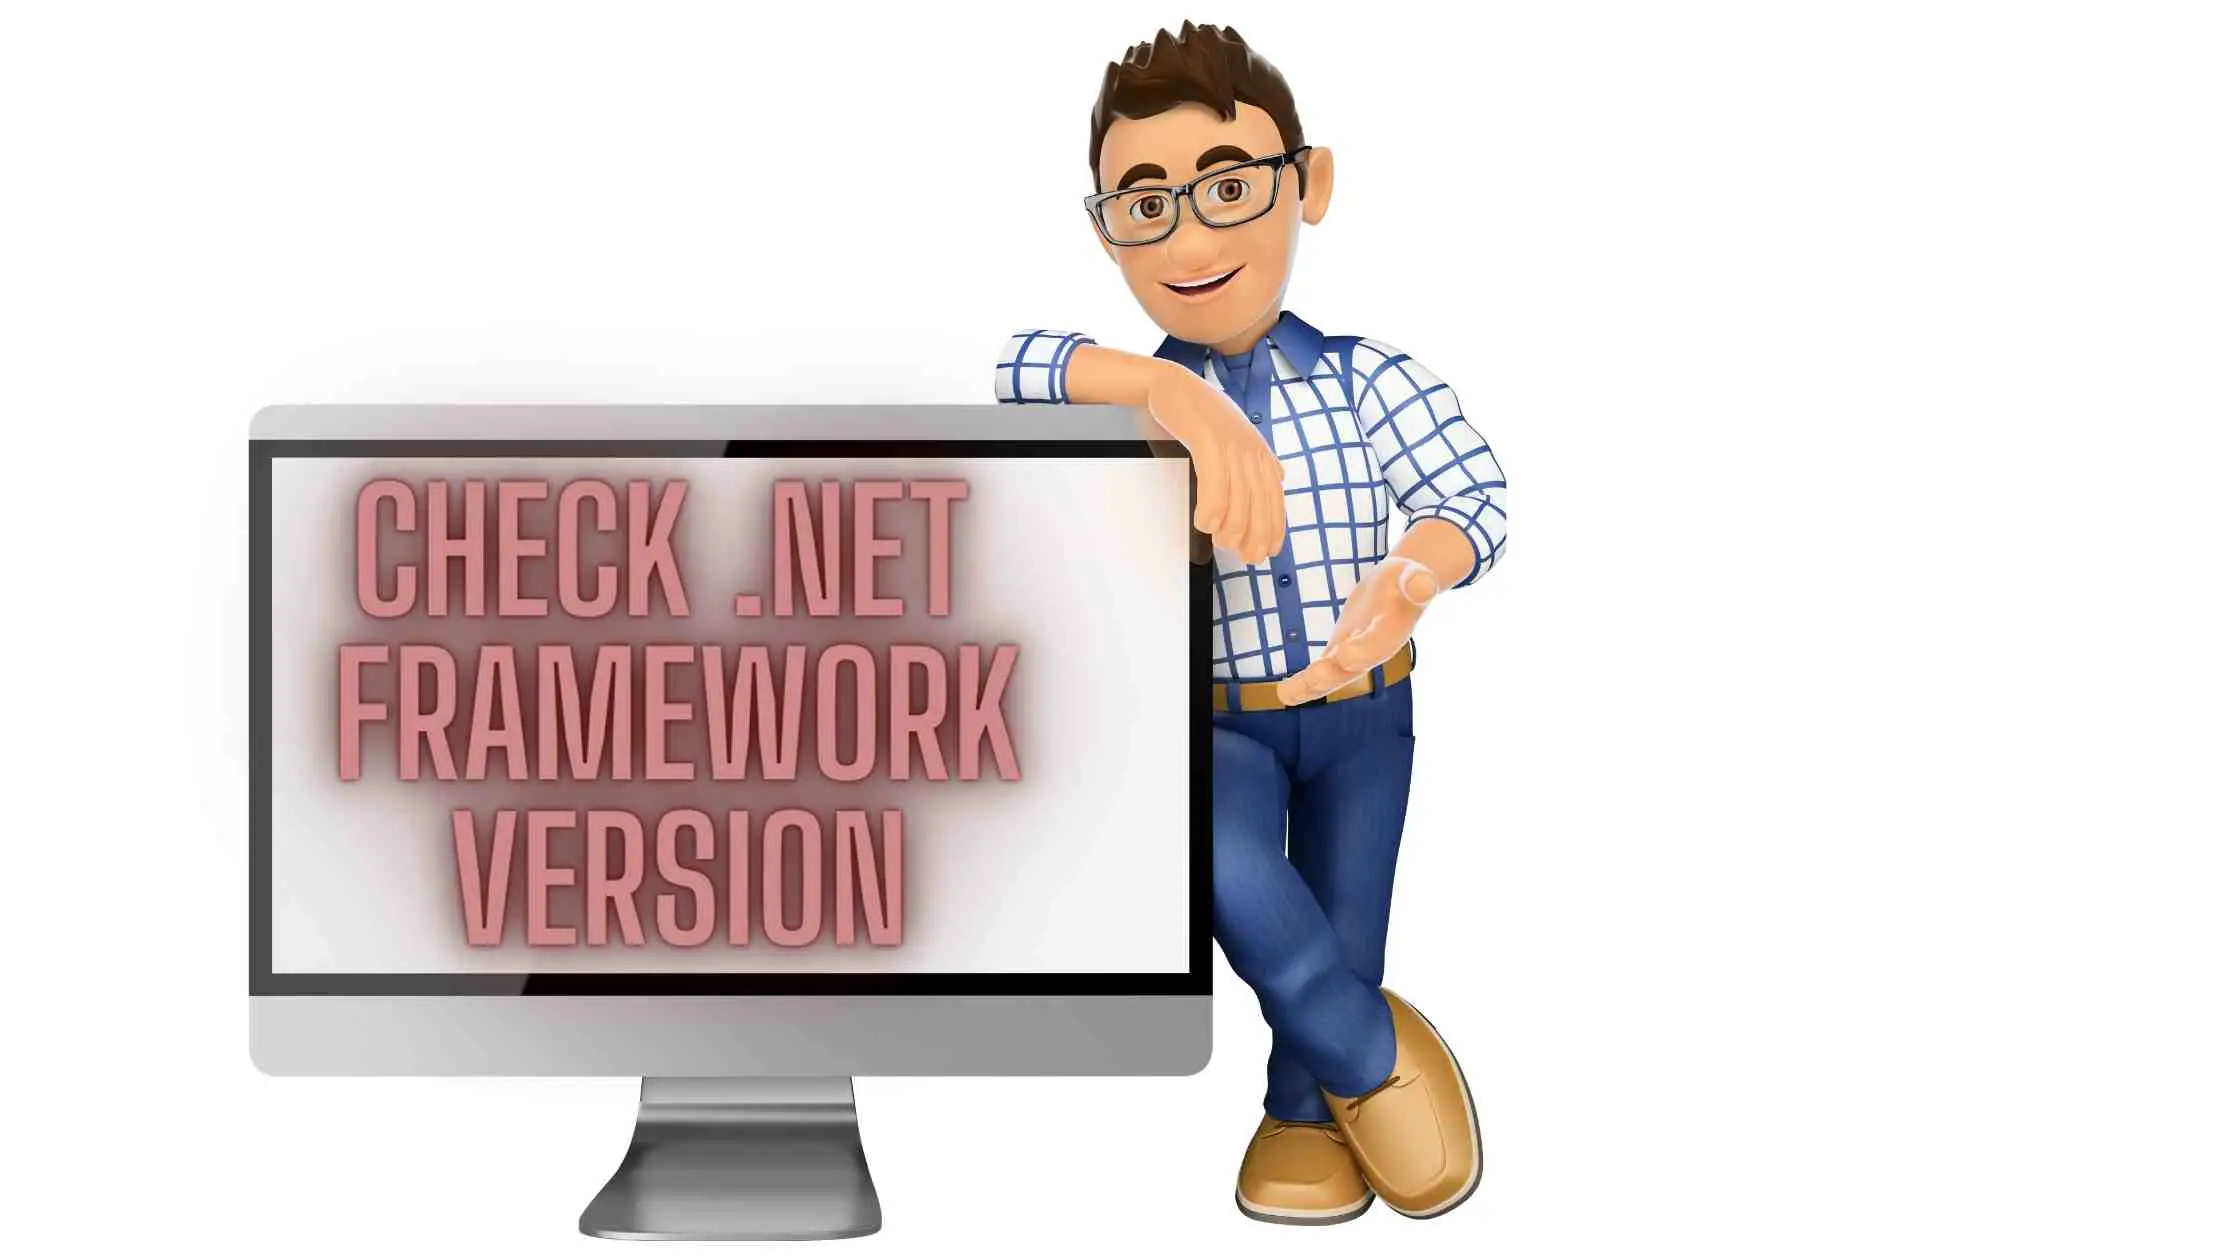 Check .NET Framework Version 